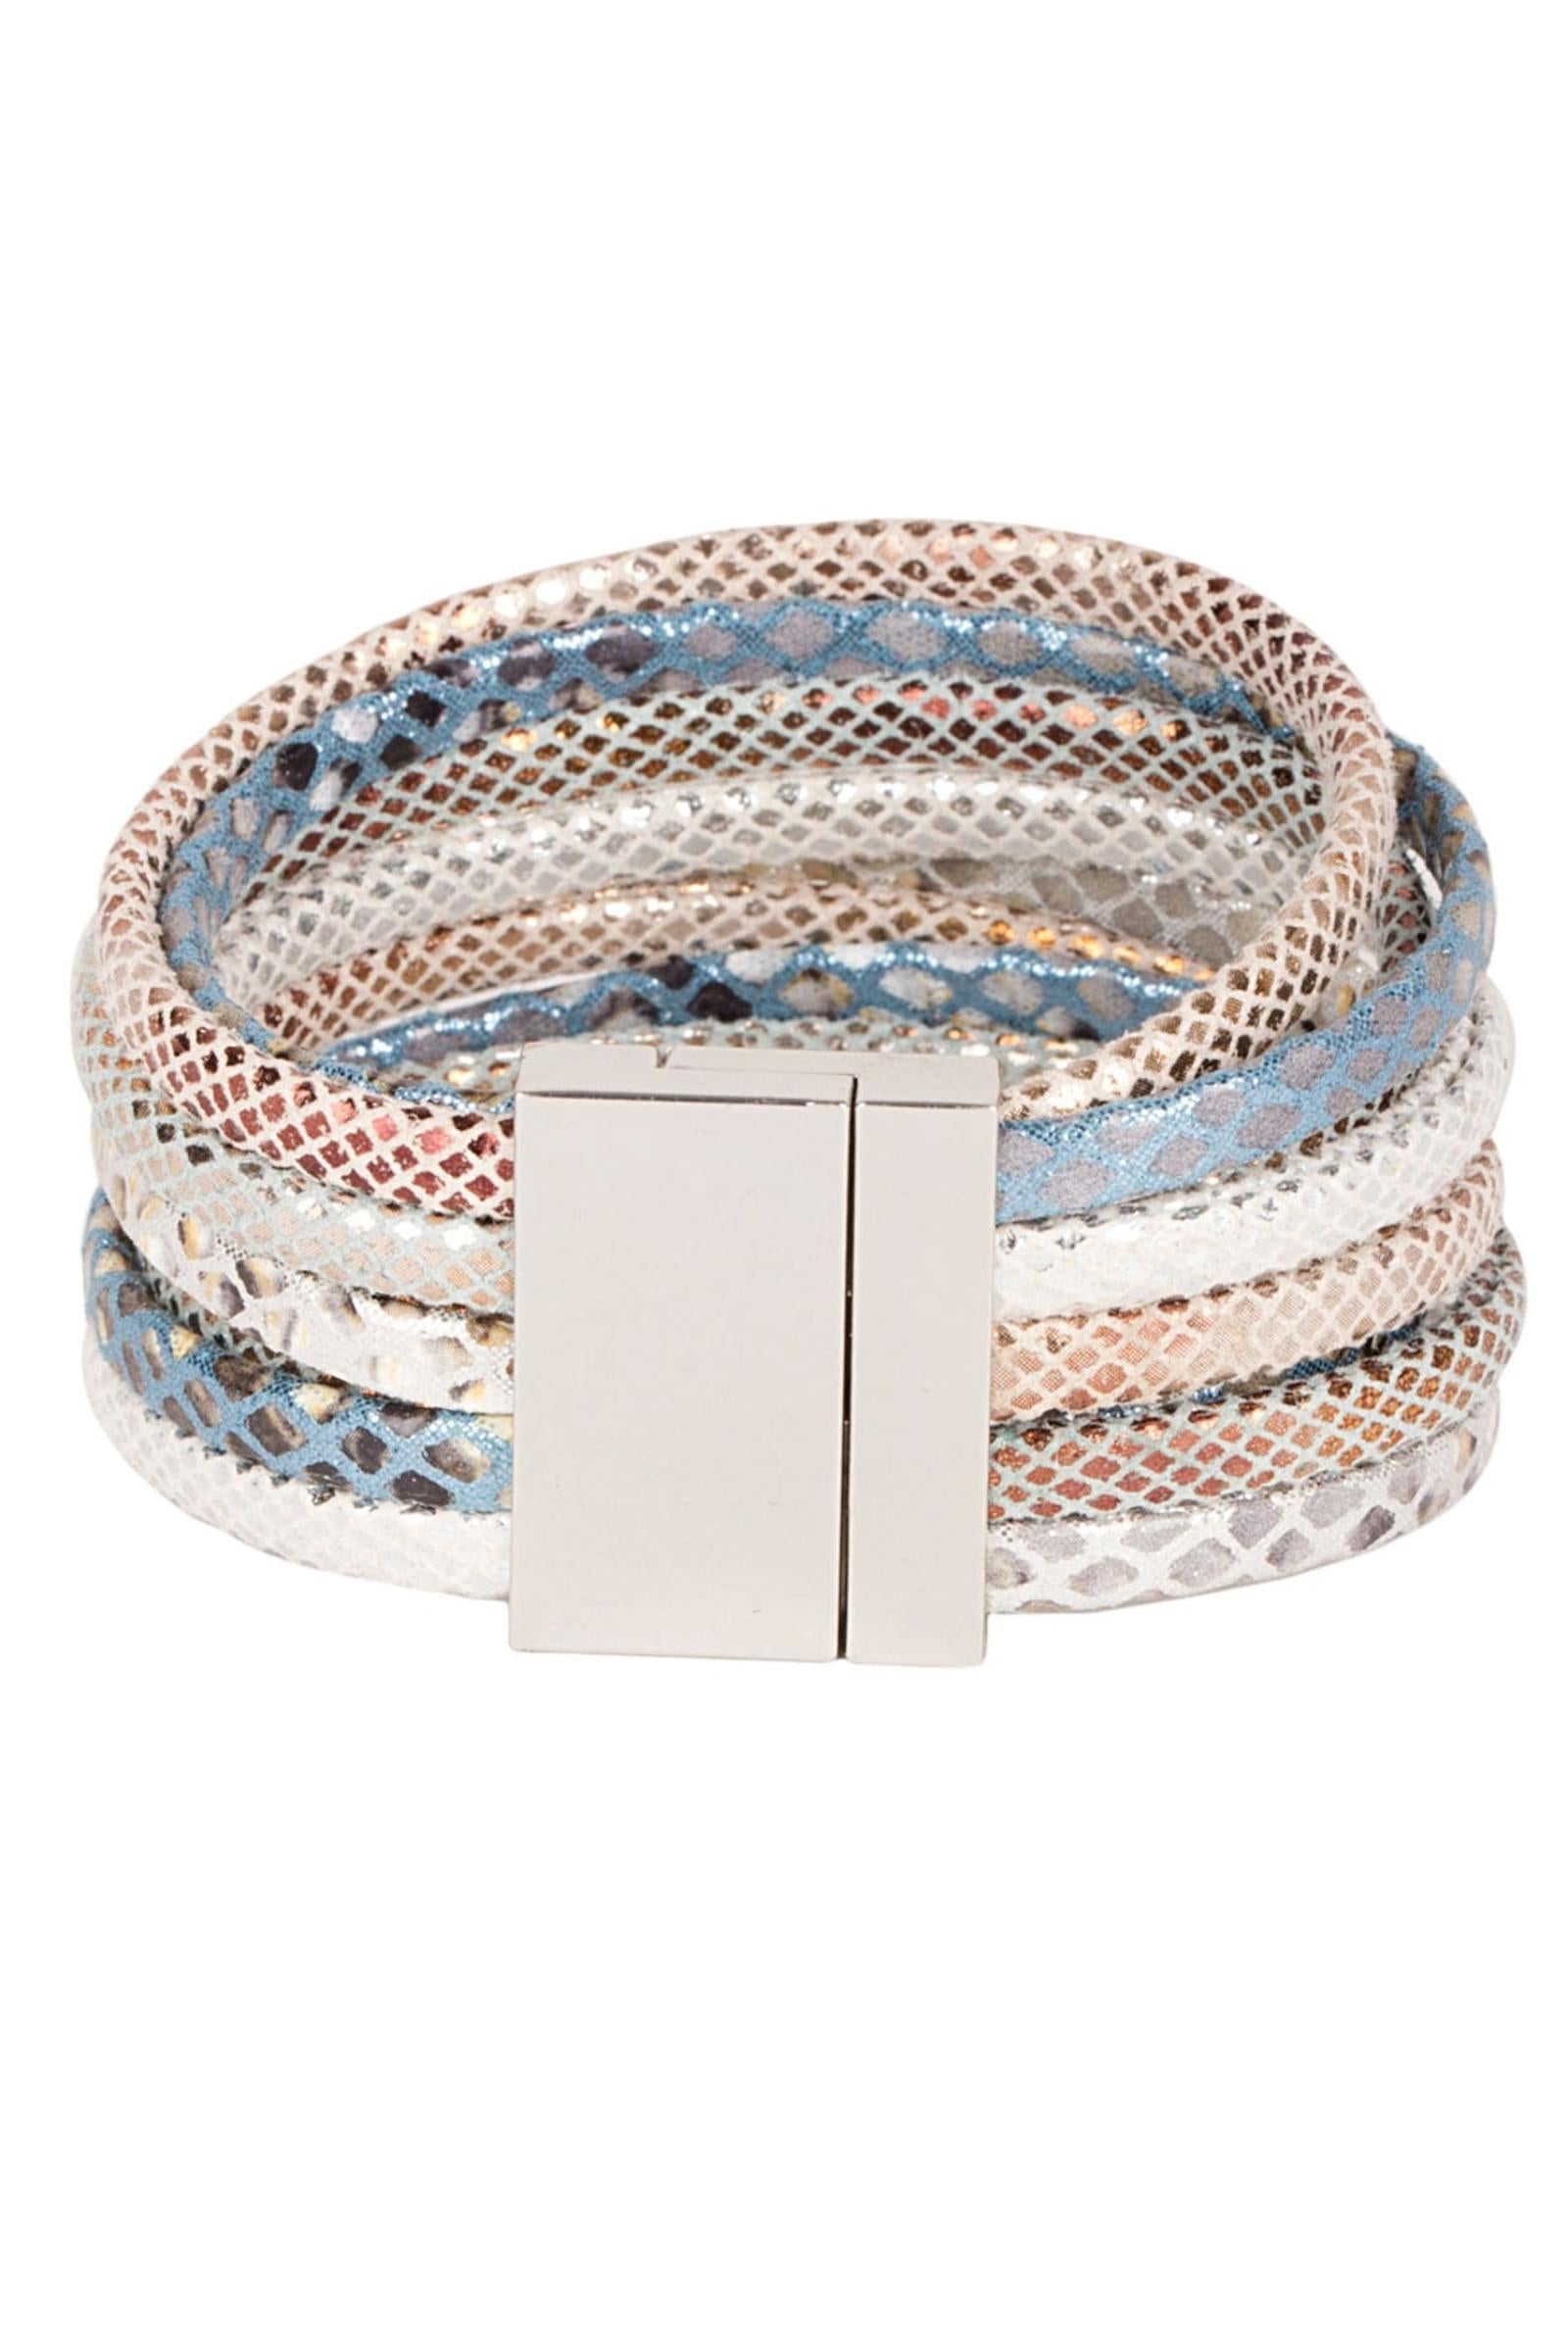 The Snake Skin Leather Double Wrap Bracelet M/L